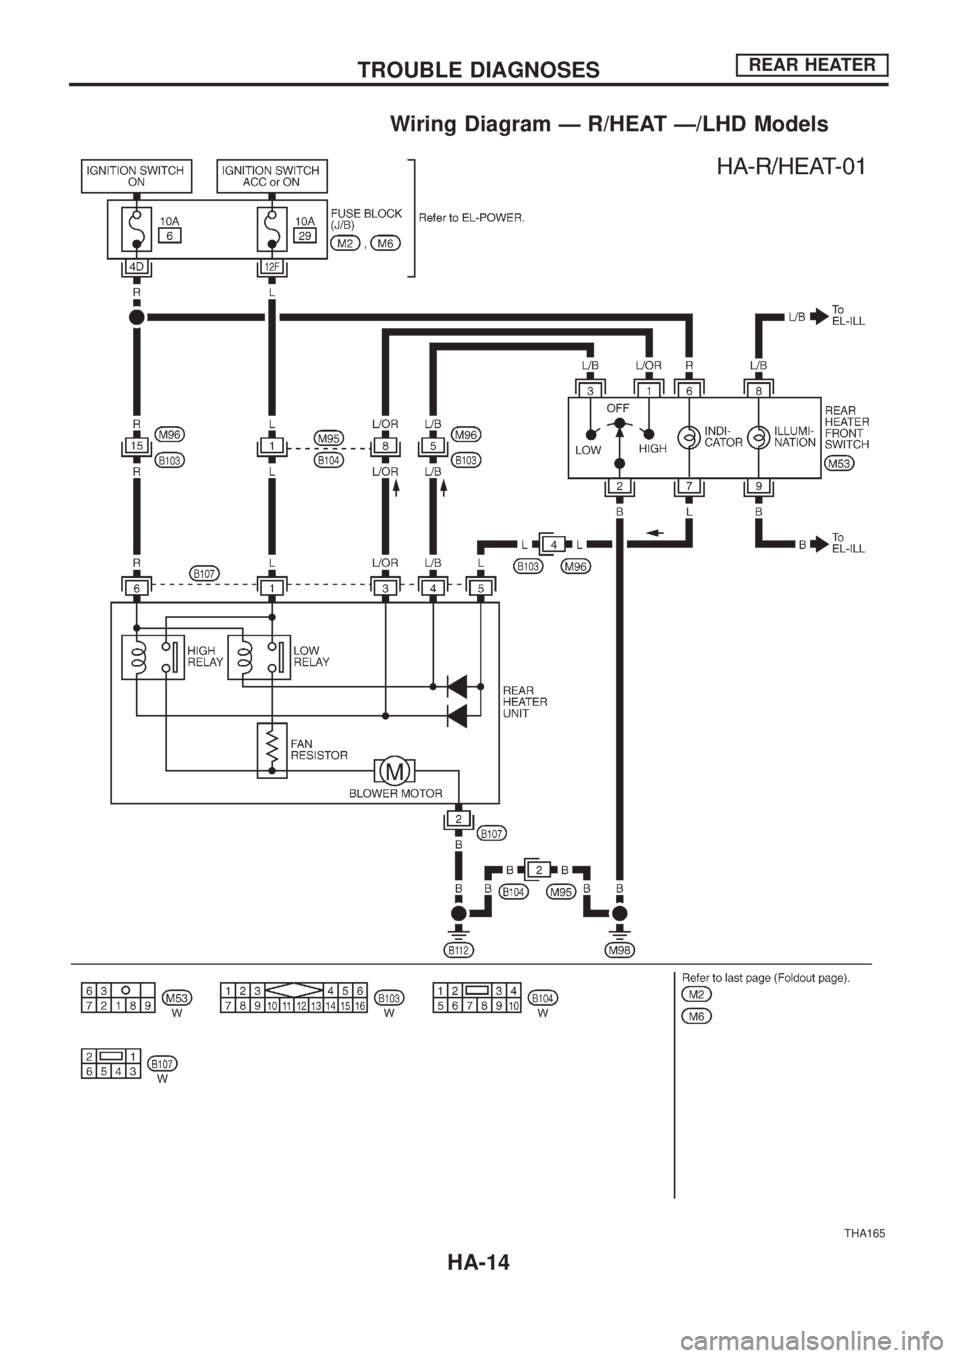 NISSAN PATROL 2006  Service Manual Wiring Diagram Ð R/HEAT Ð/LHD Models
THA165
TROUBLE DIAGNOSESREAR HEATER
HA-14 